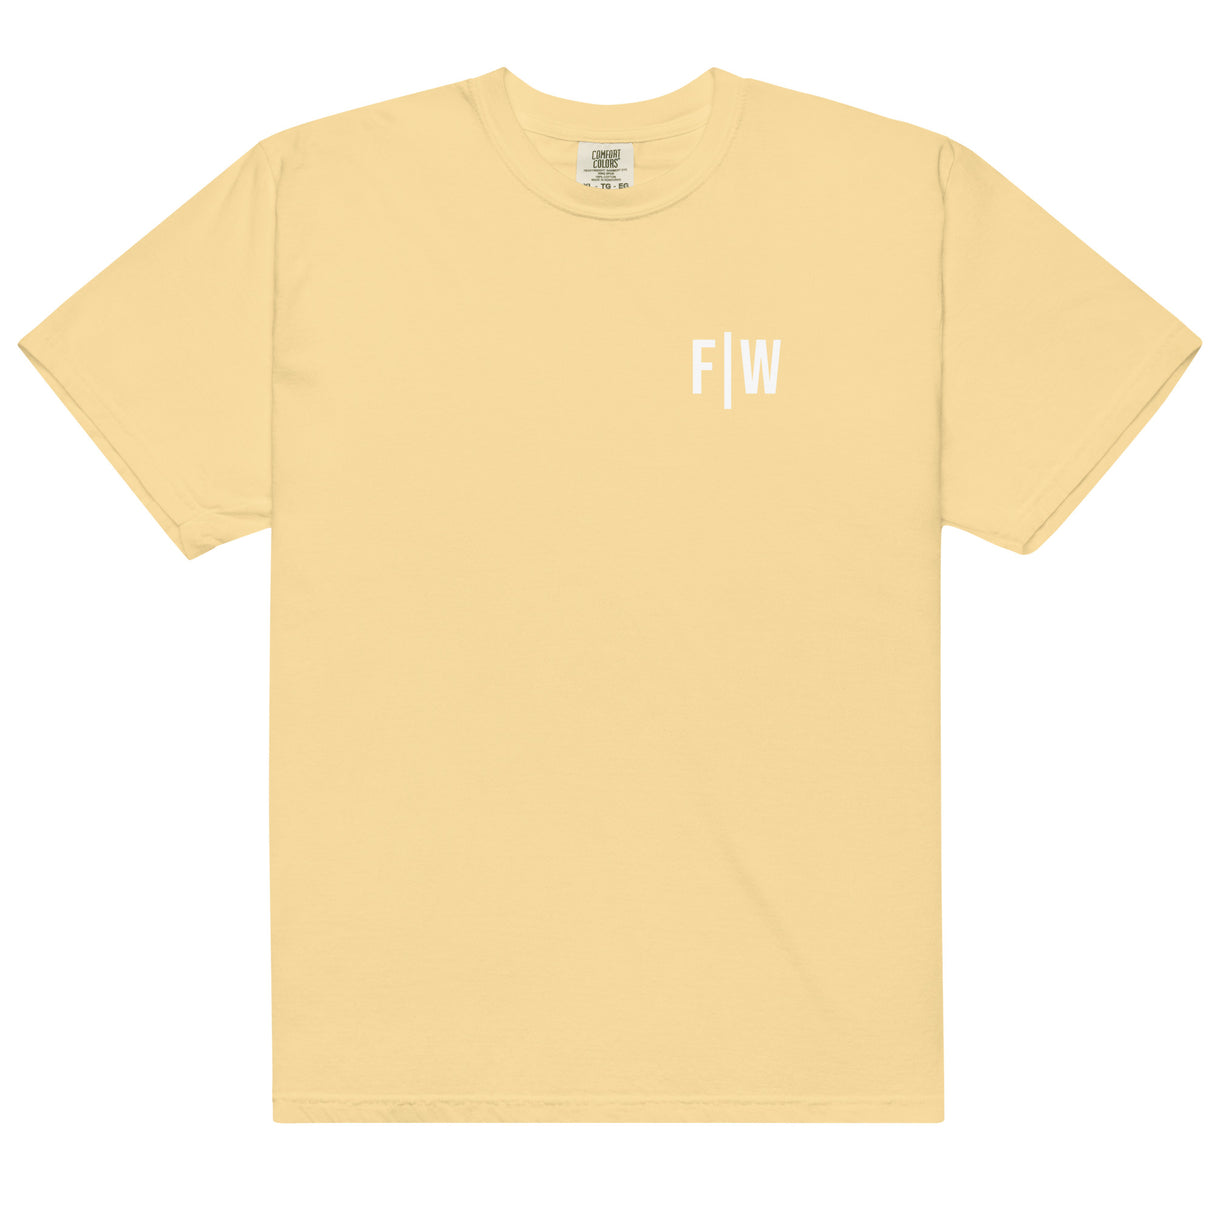 F|W Shirt